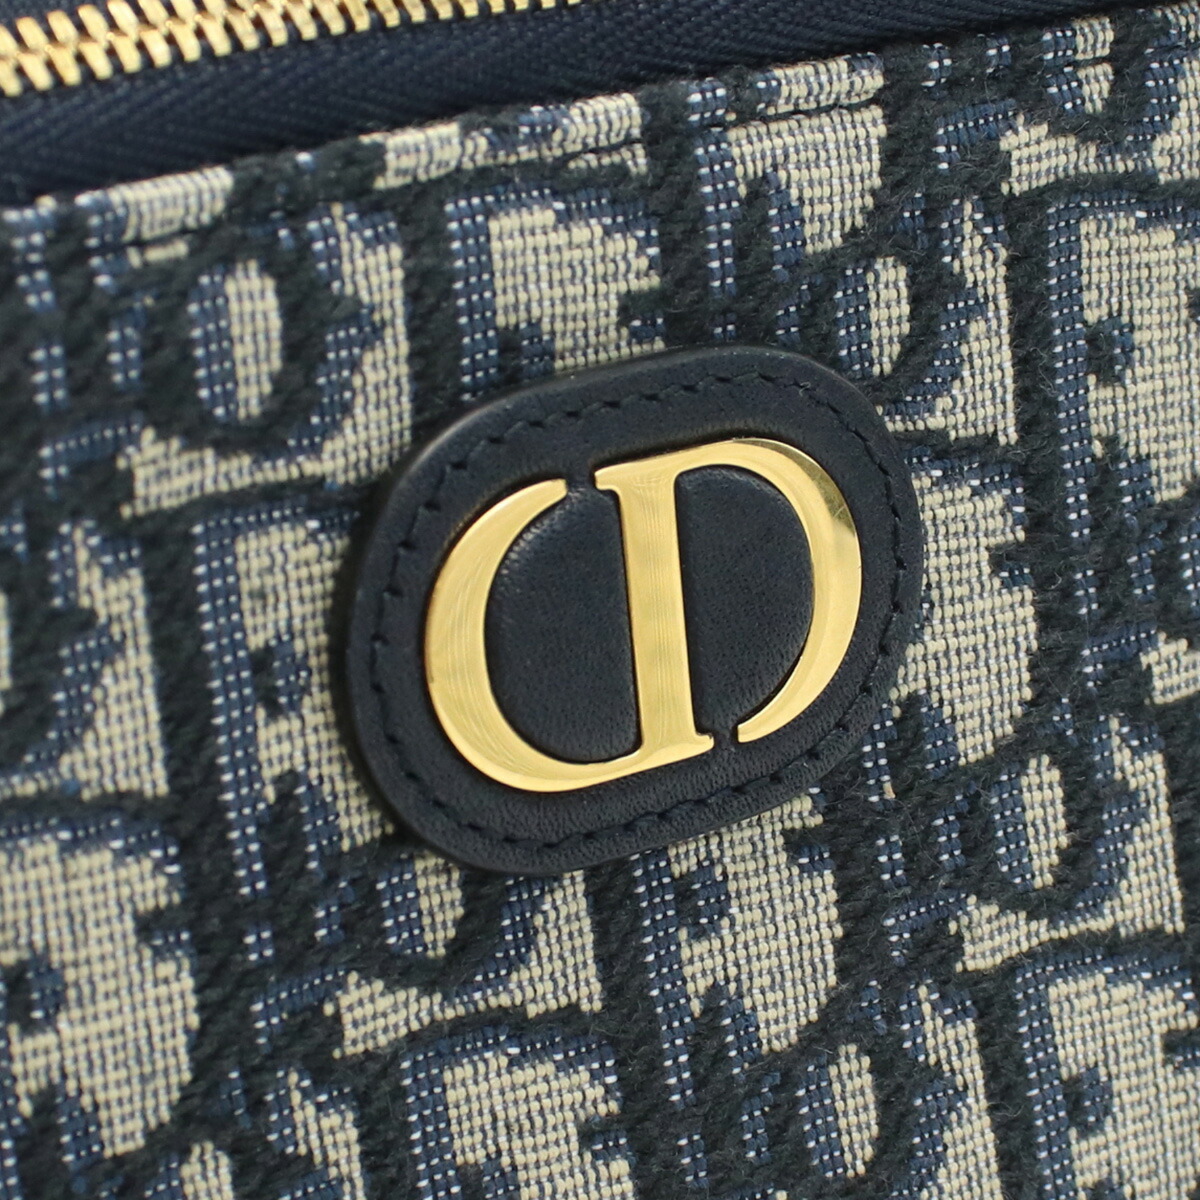 Armerie Boutique ディオール Christian Dior 斜め掛けショルダー ブランド バッグ S2141 UTZQ M928  ネイビー系 bag-01 24_sum